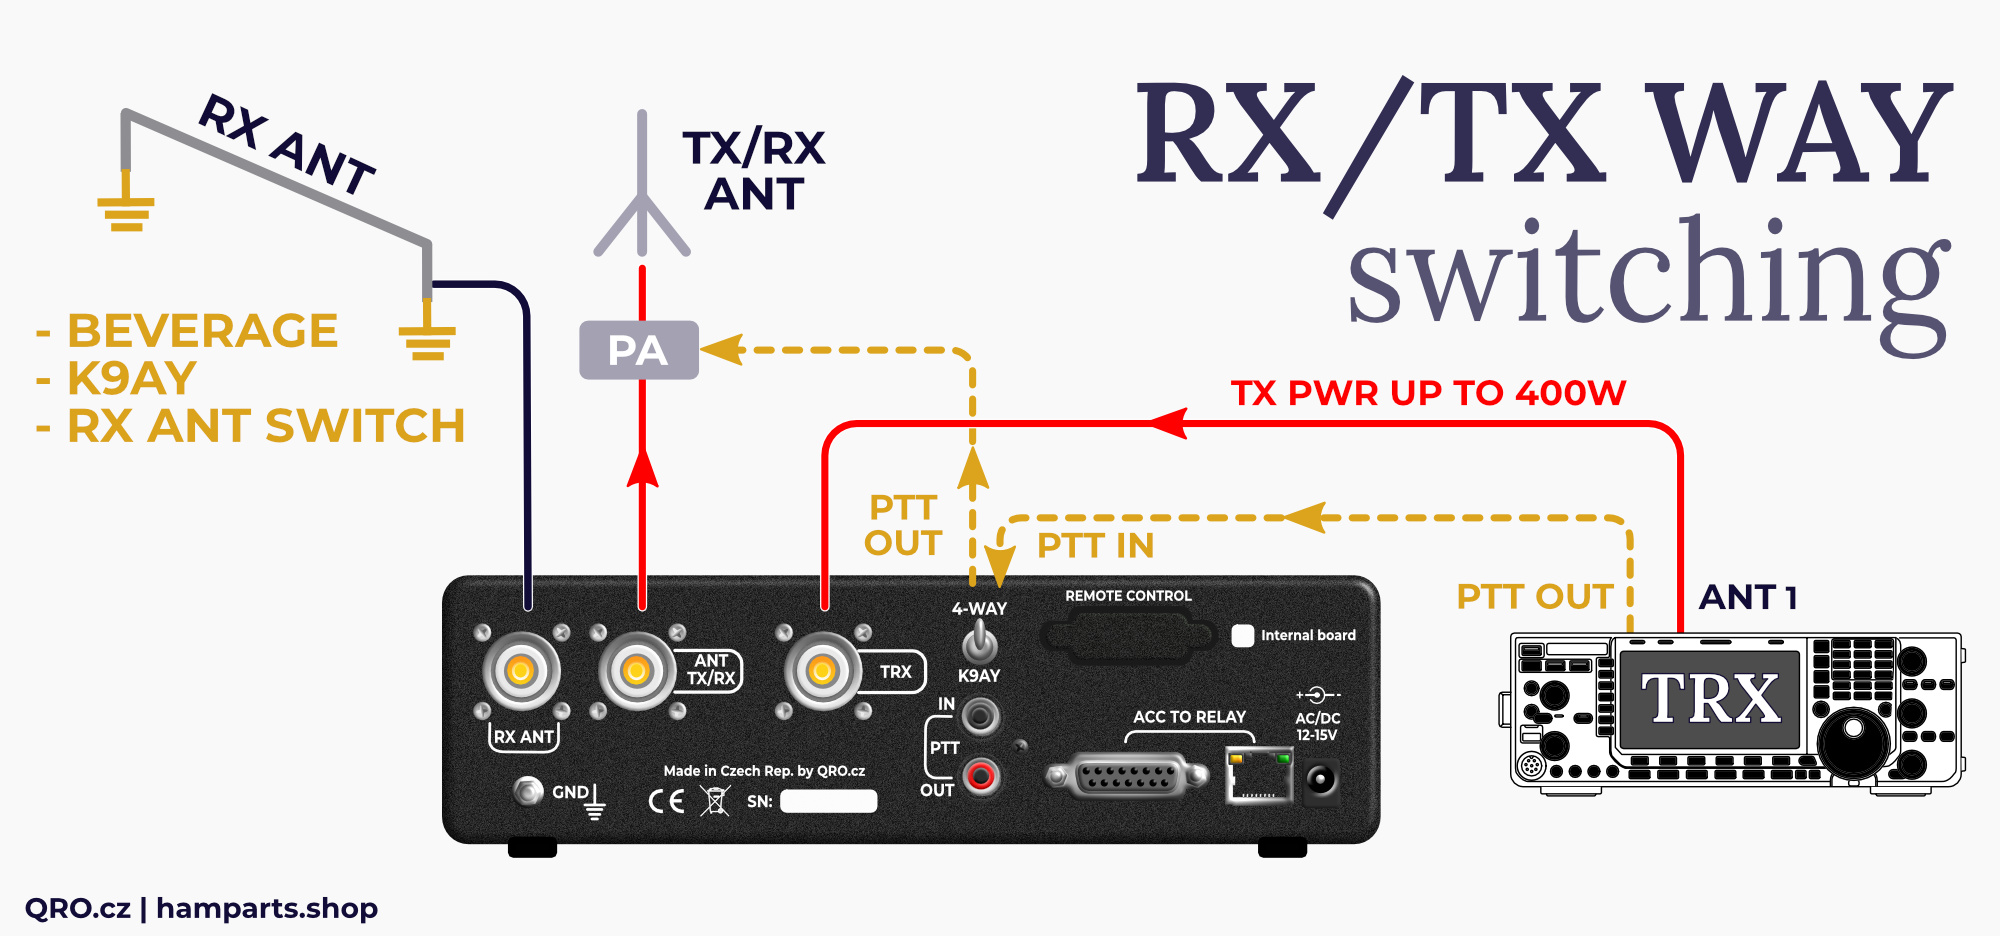 k9ay/4-way controller rx tx switching qro.cz hamparts.shop